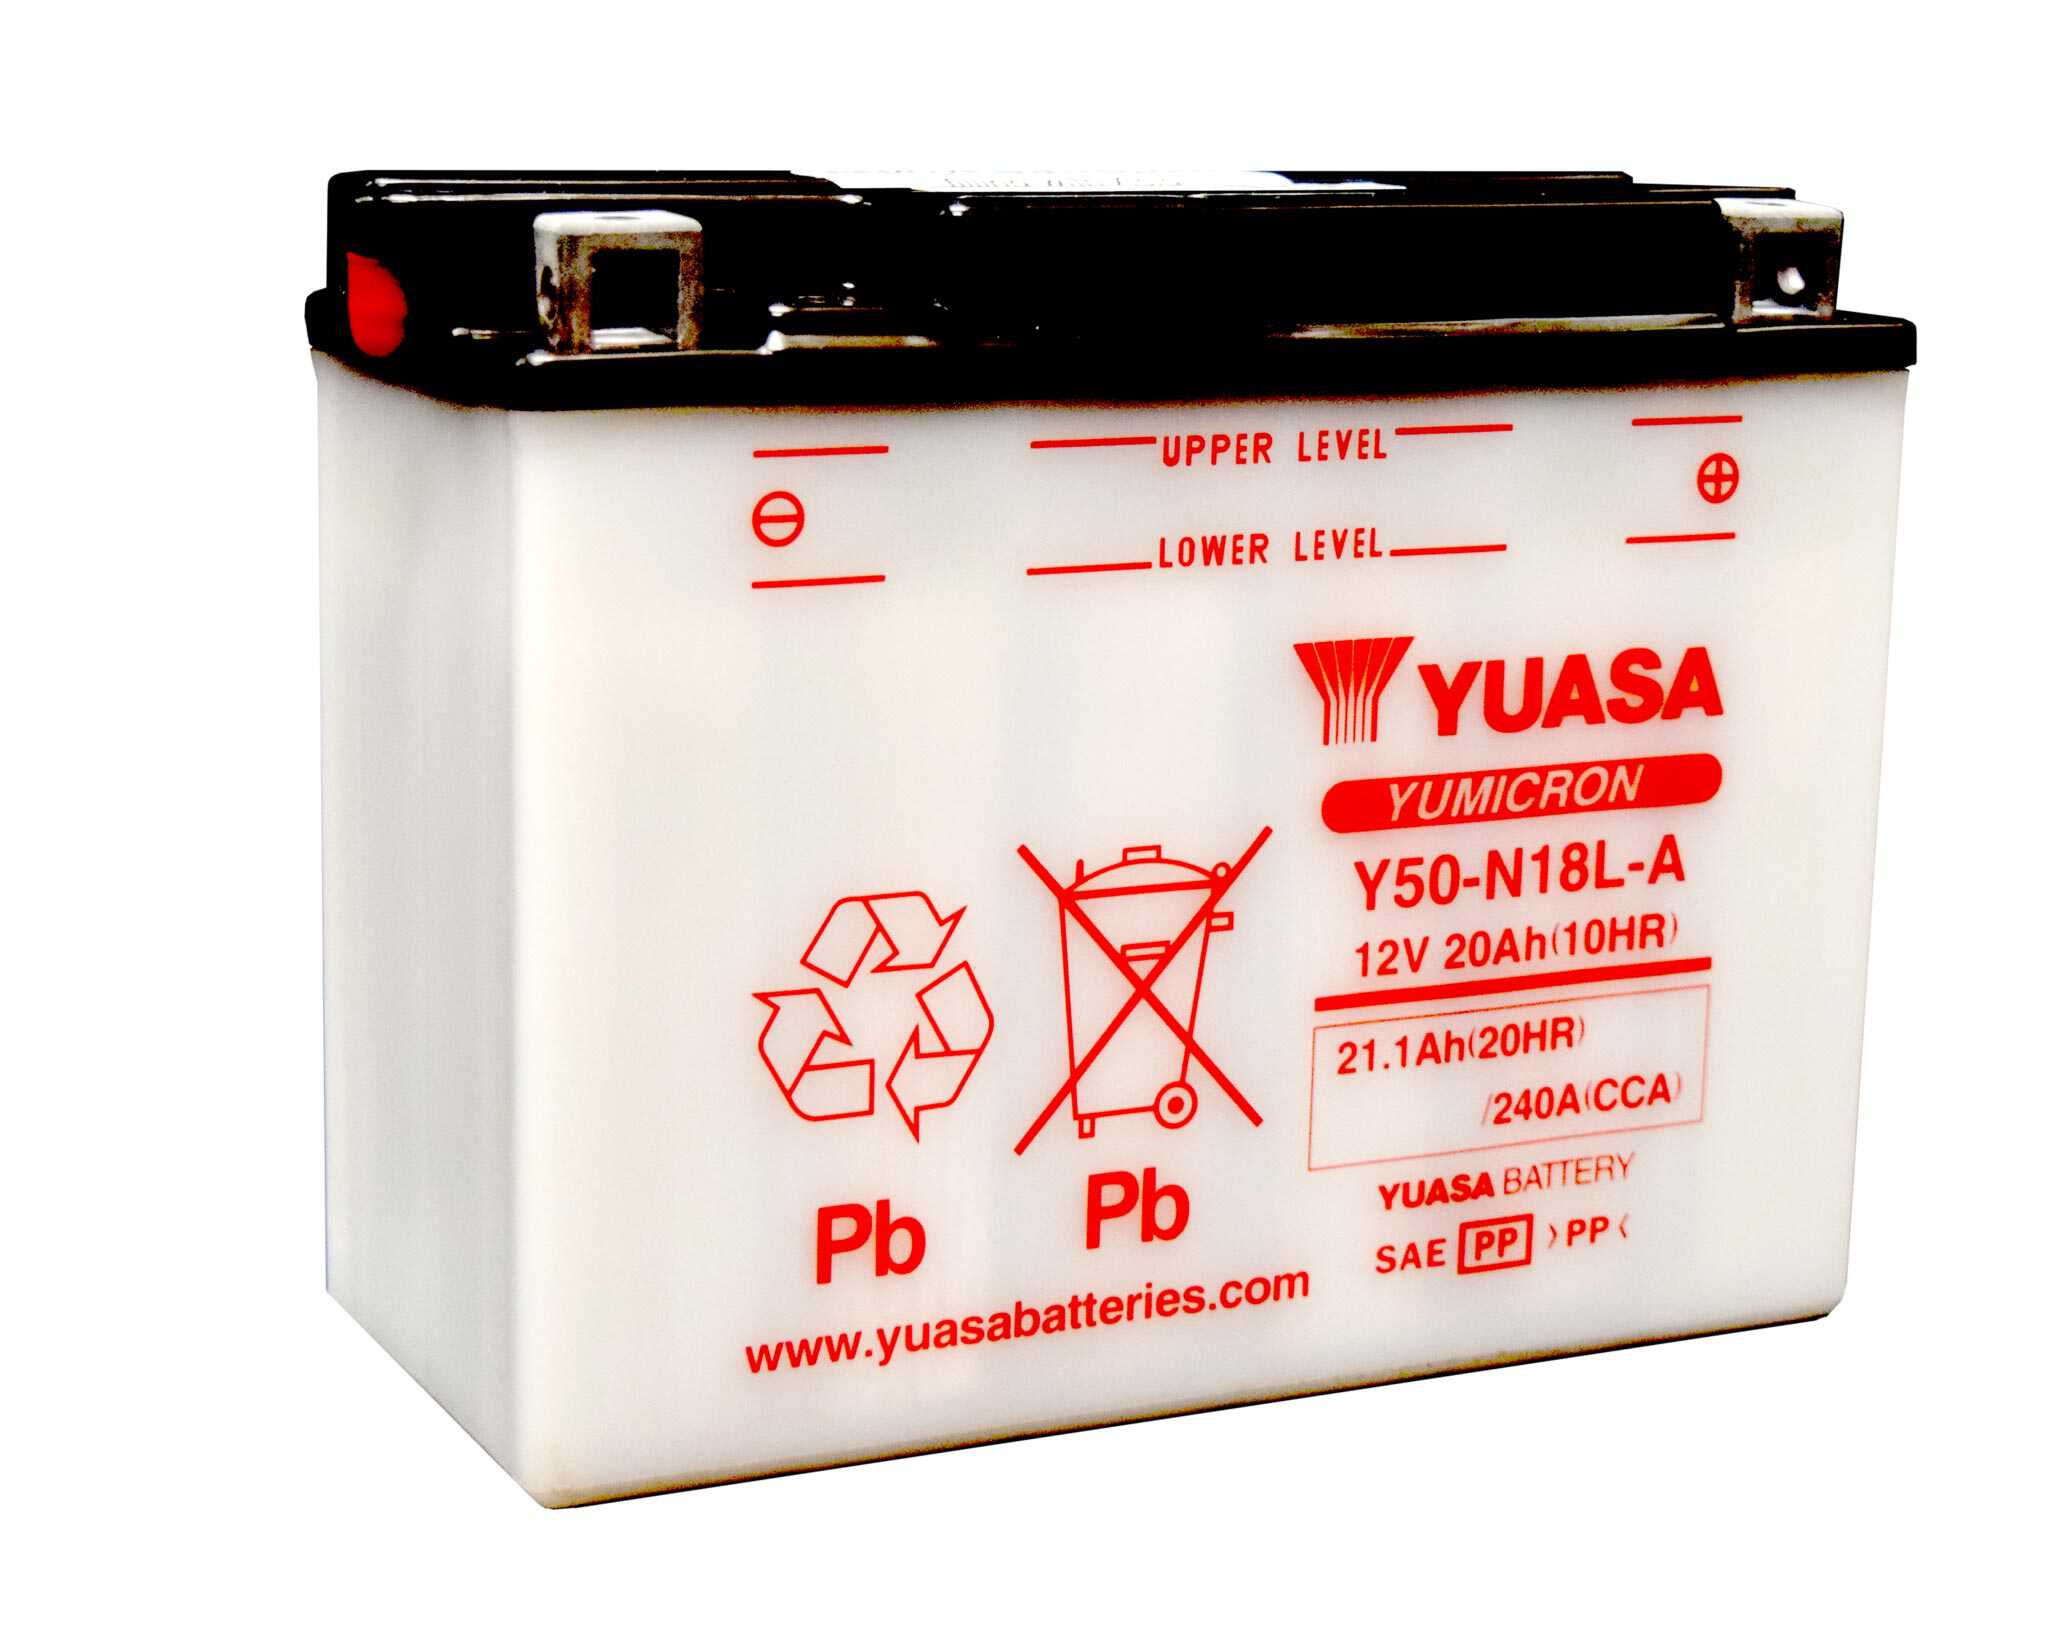 Battery 12V 60Ah 640A YUASA high performance (YBX5075) - Vlad